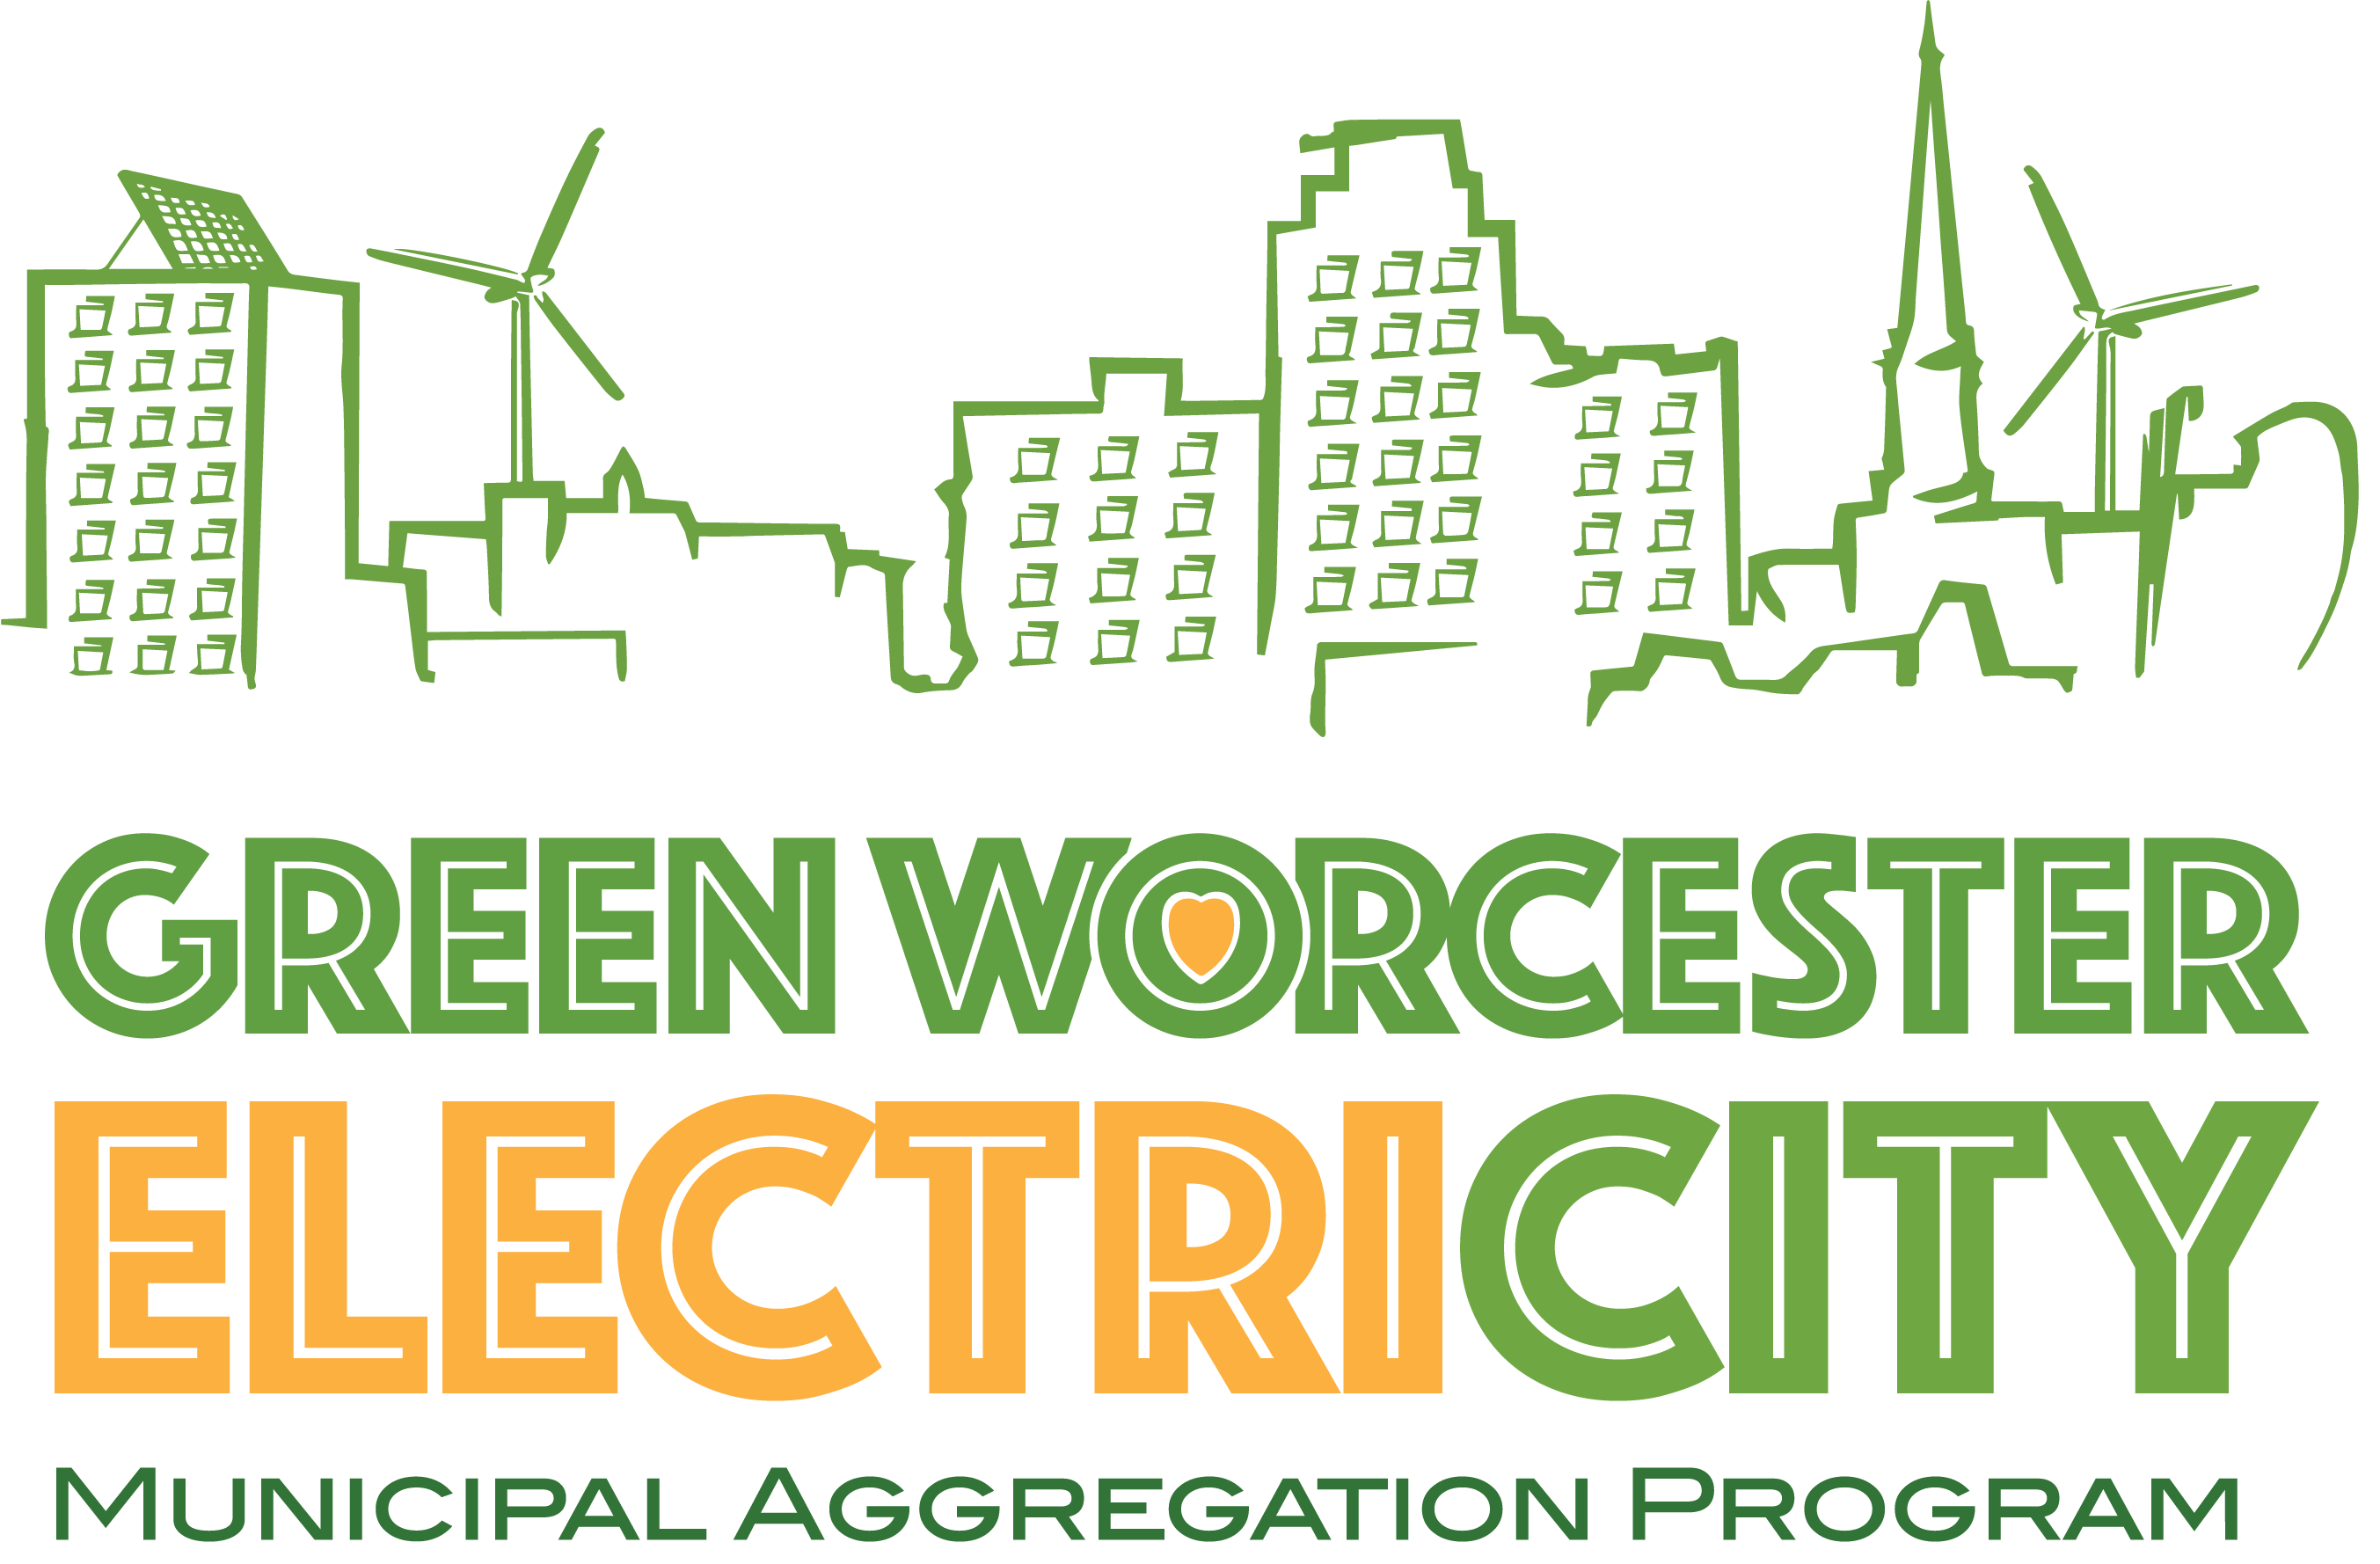 Green Worcester Electricity Municipal Aggregation Program